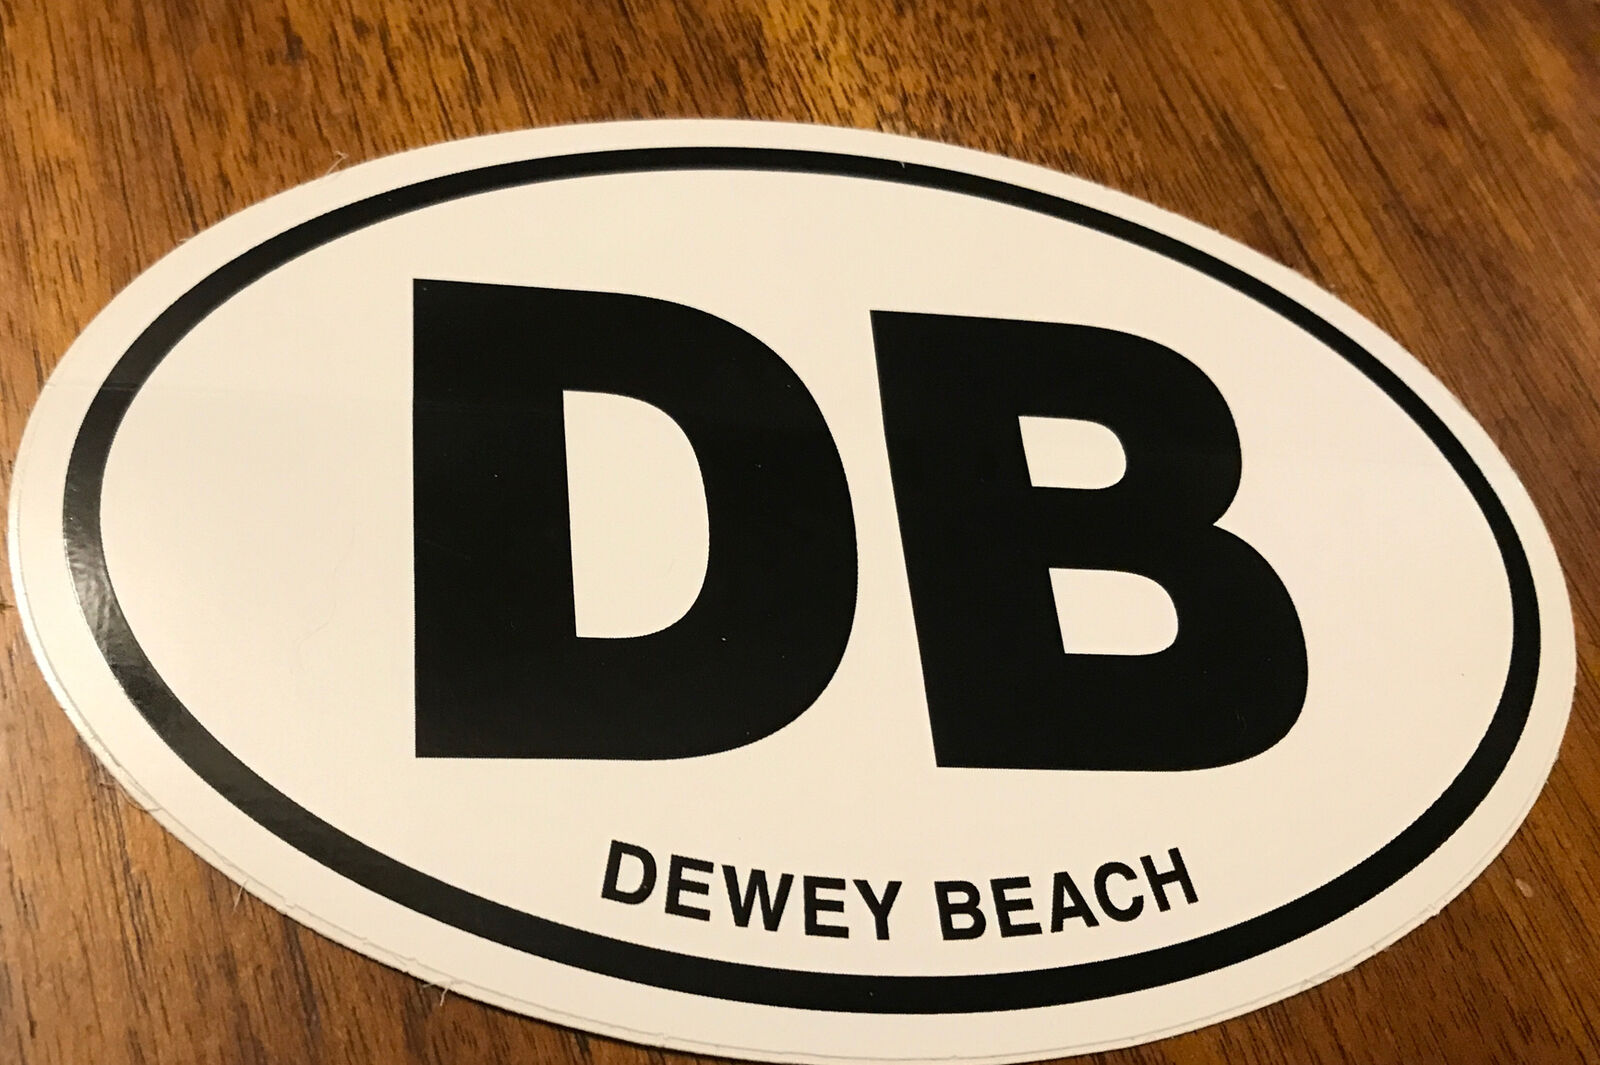 5x3 DBD Dewey Beach Delaware Sticker Car Truck Vehicle Bumper Decal White Black